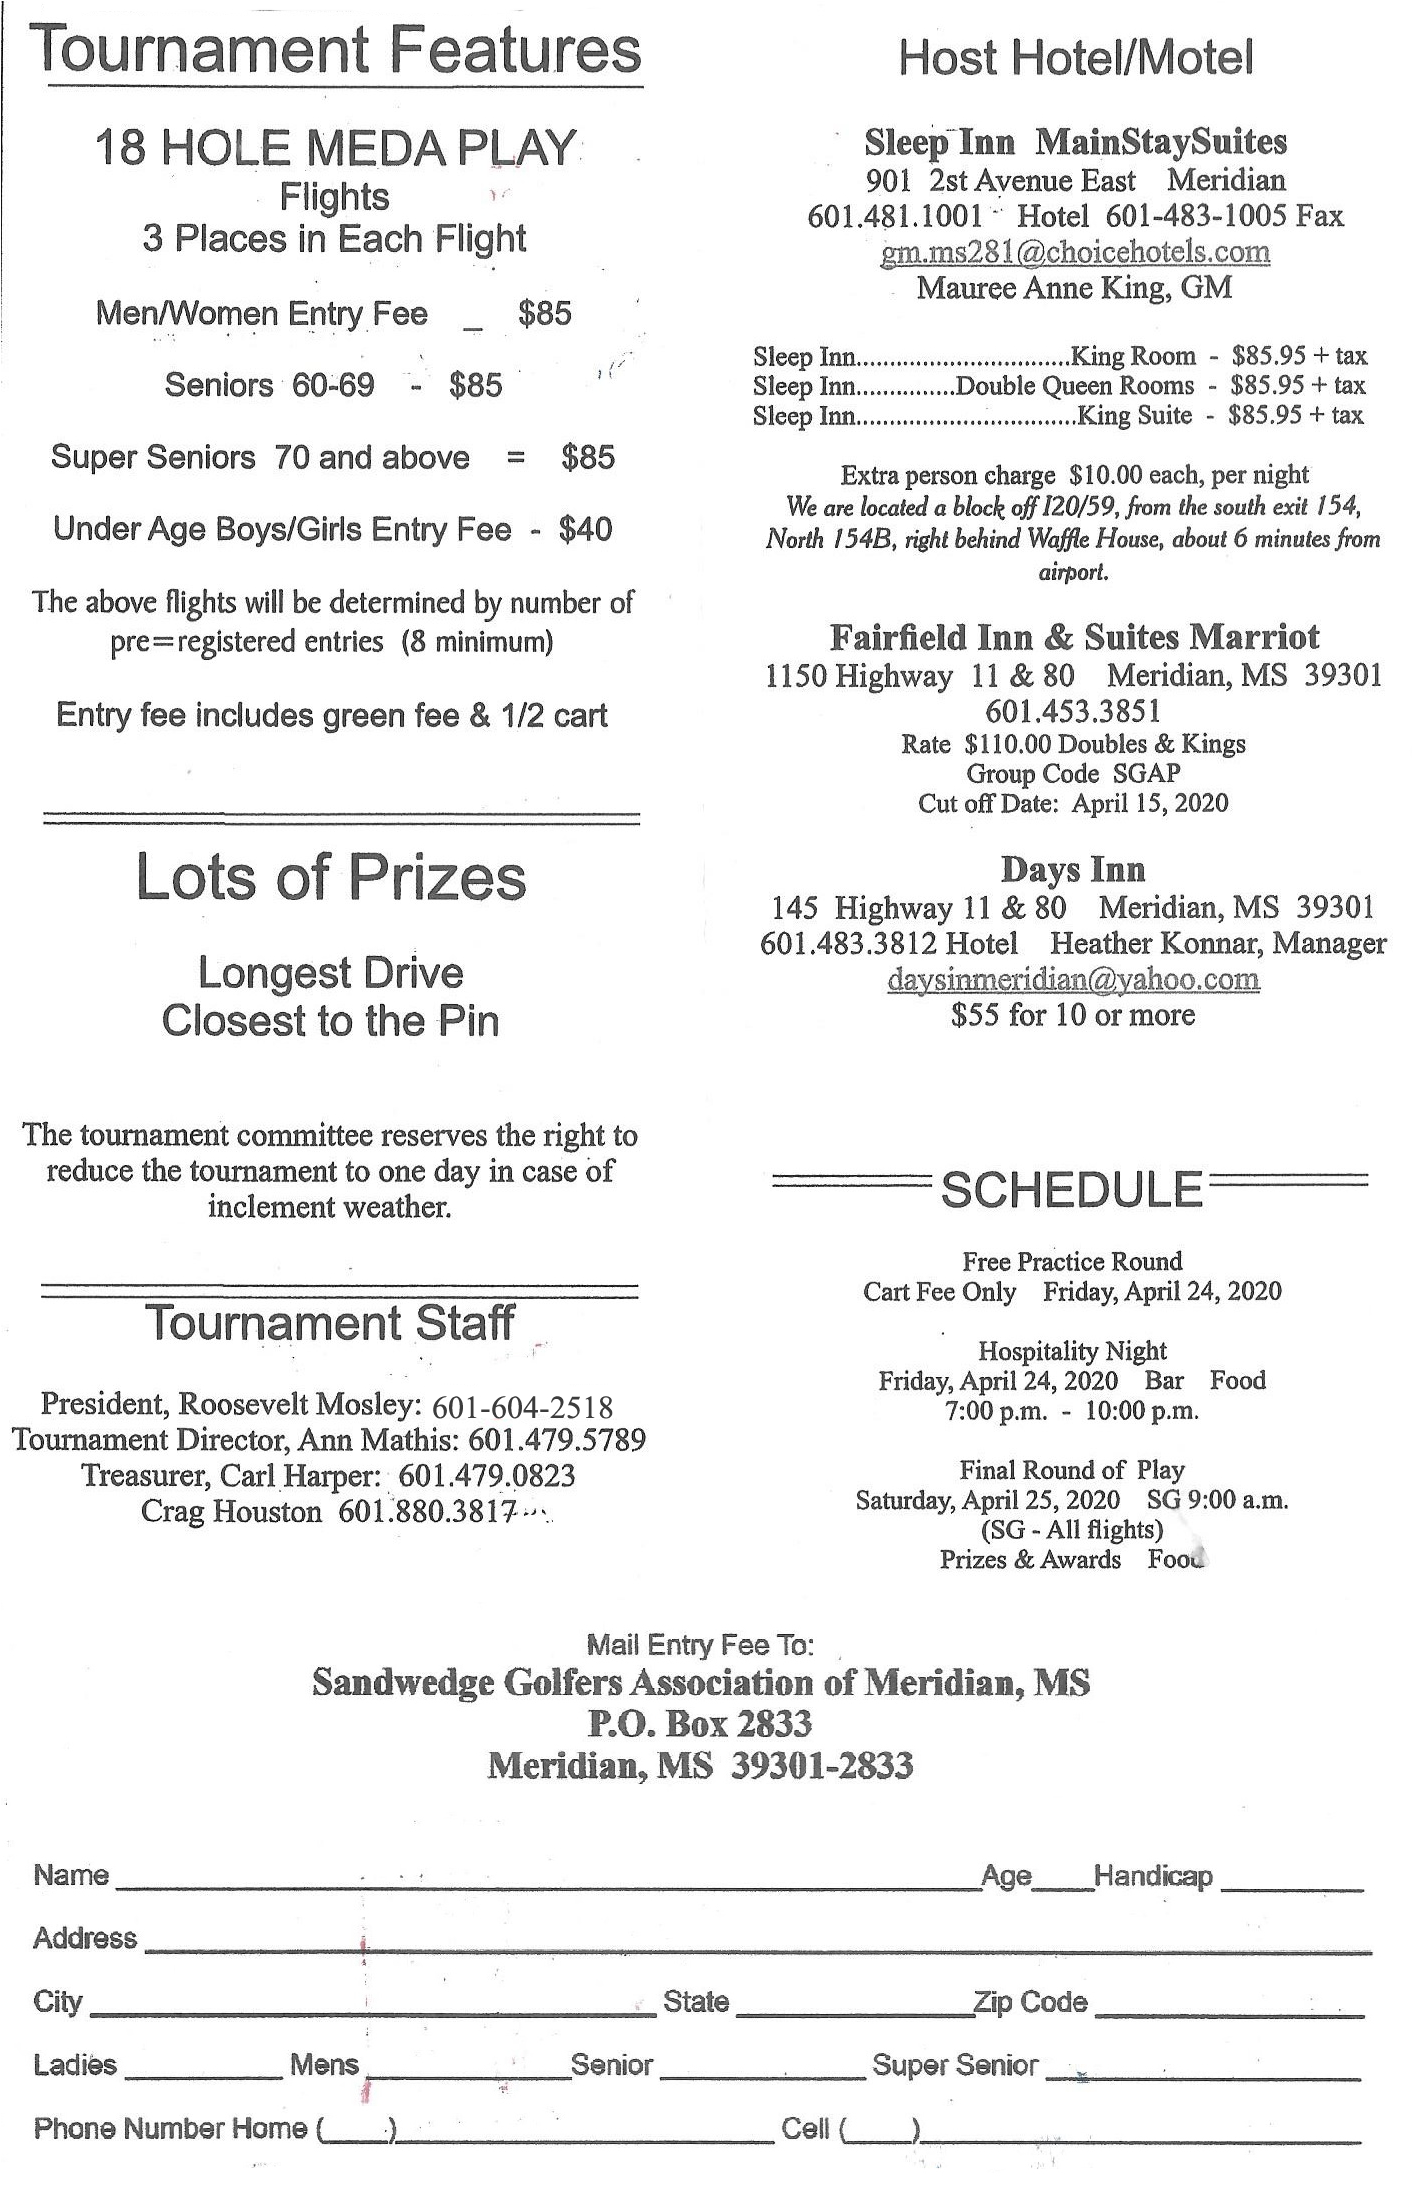 Registration Annual Golf Tournament Sandwedge golf association